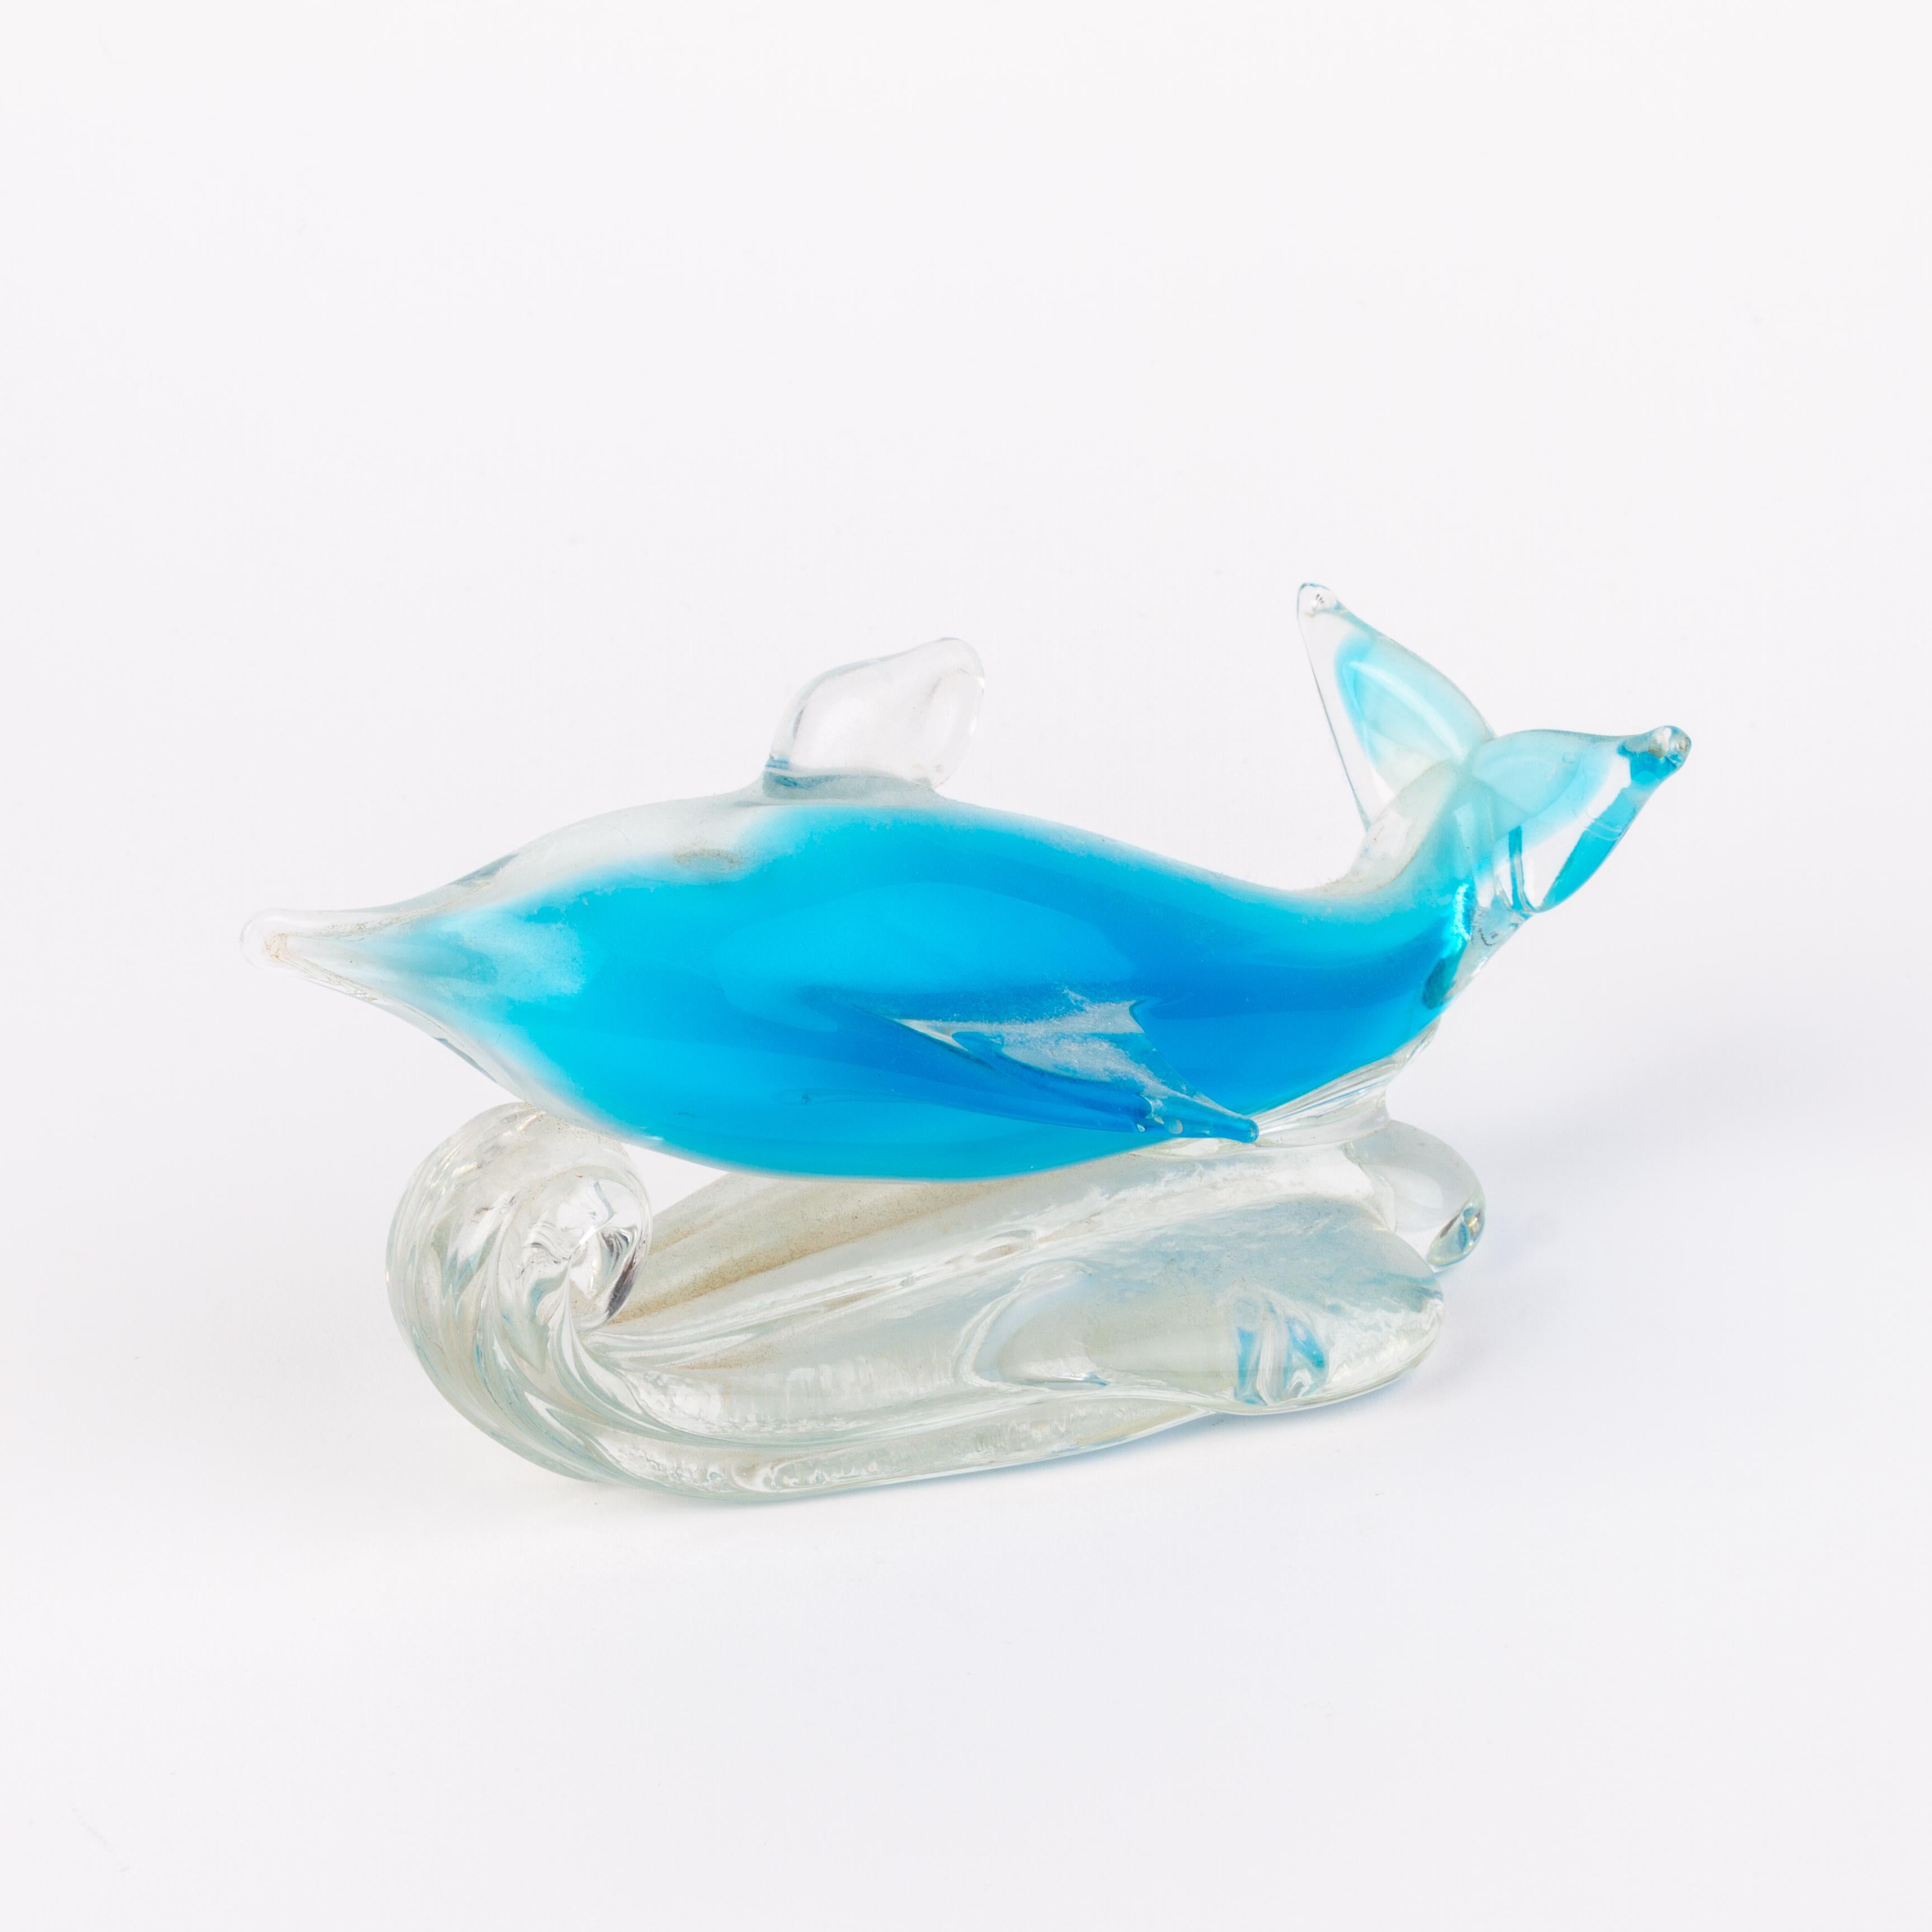 Murano Venetian Glass Sculpture Dolphin
Good condition
Free international shipping.